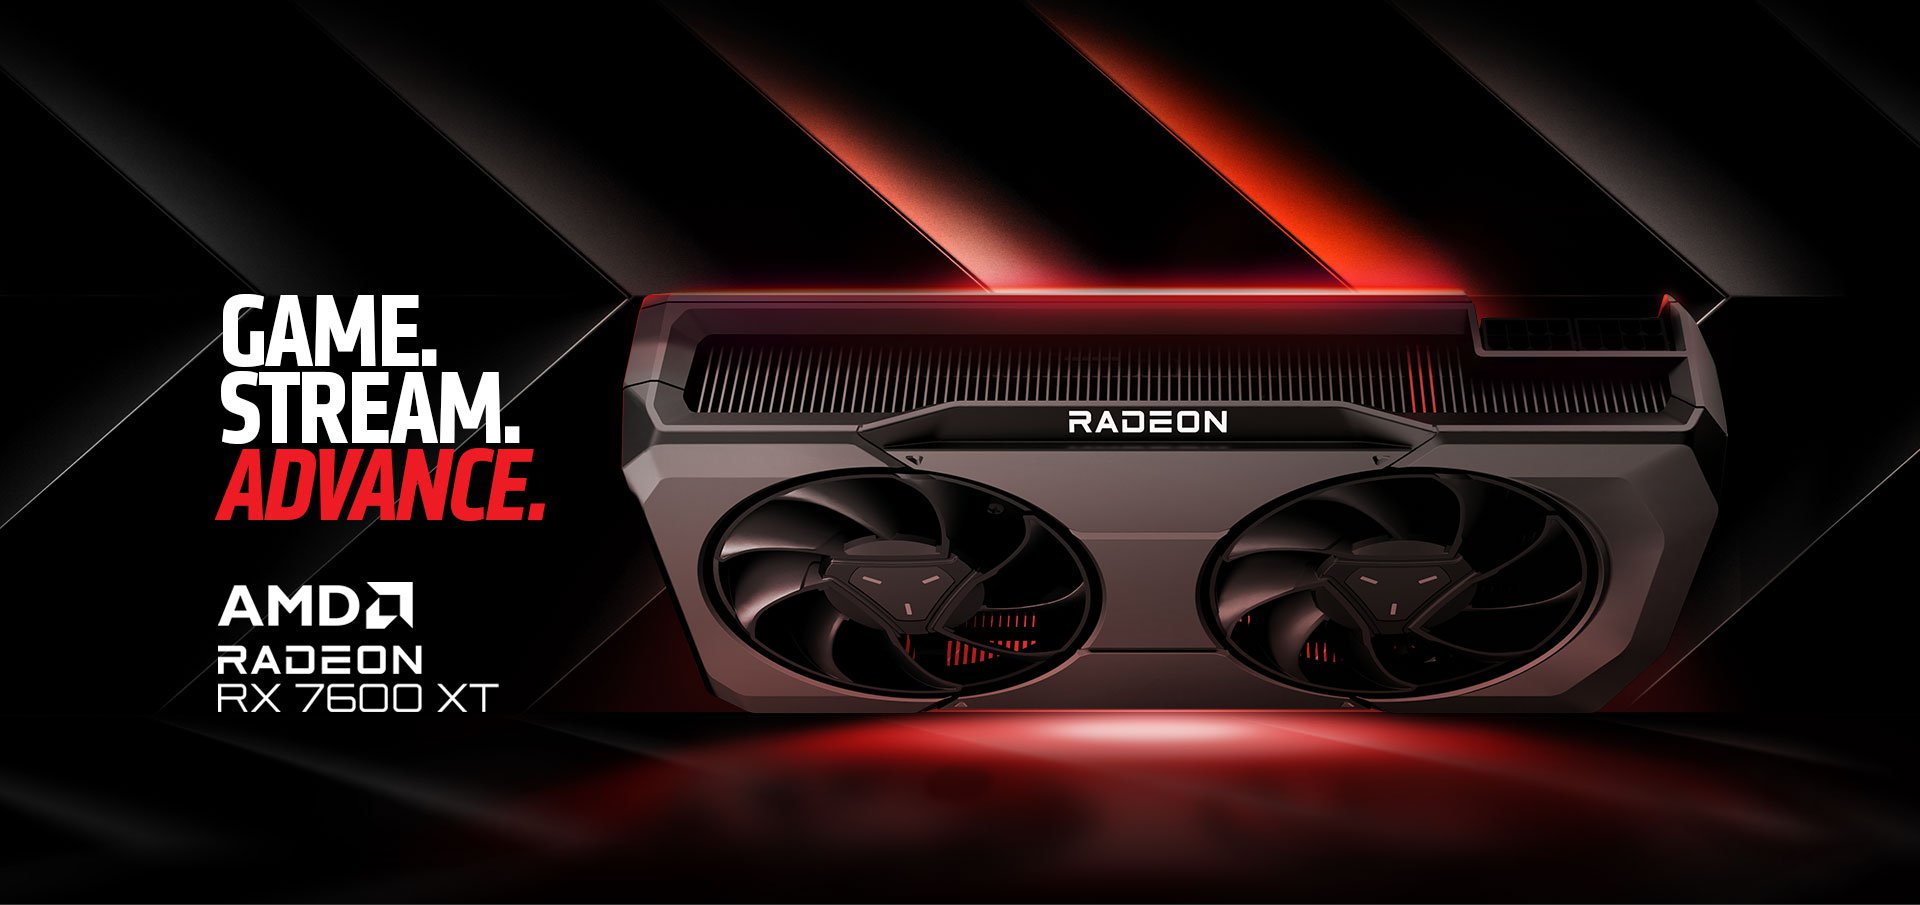 ASRock RX7600 CL 8GO AMD Radeon™ RX 7600 Challenger 8GB OC Graphics Card